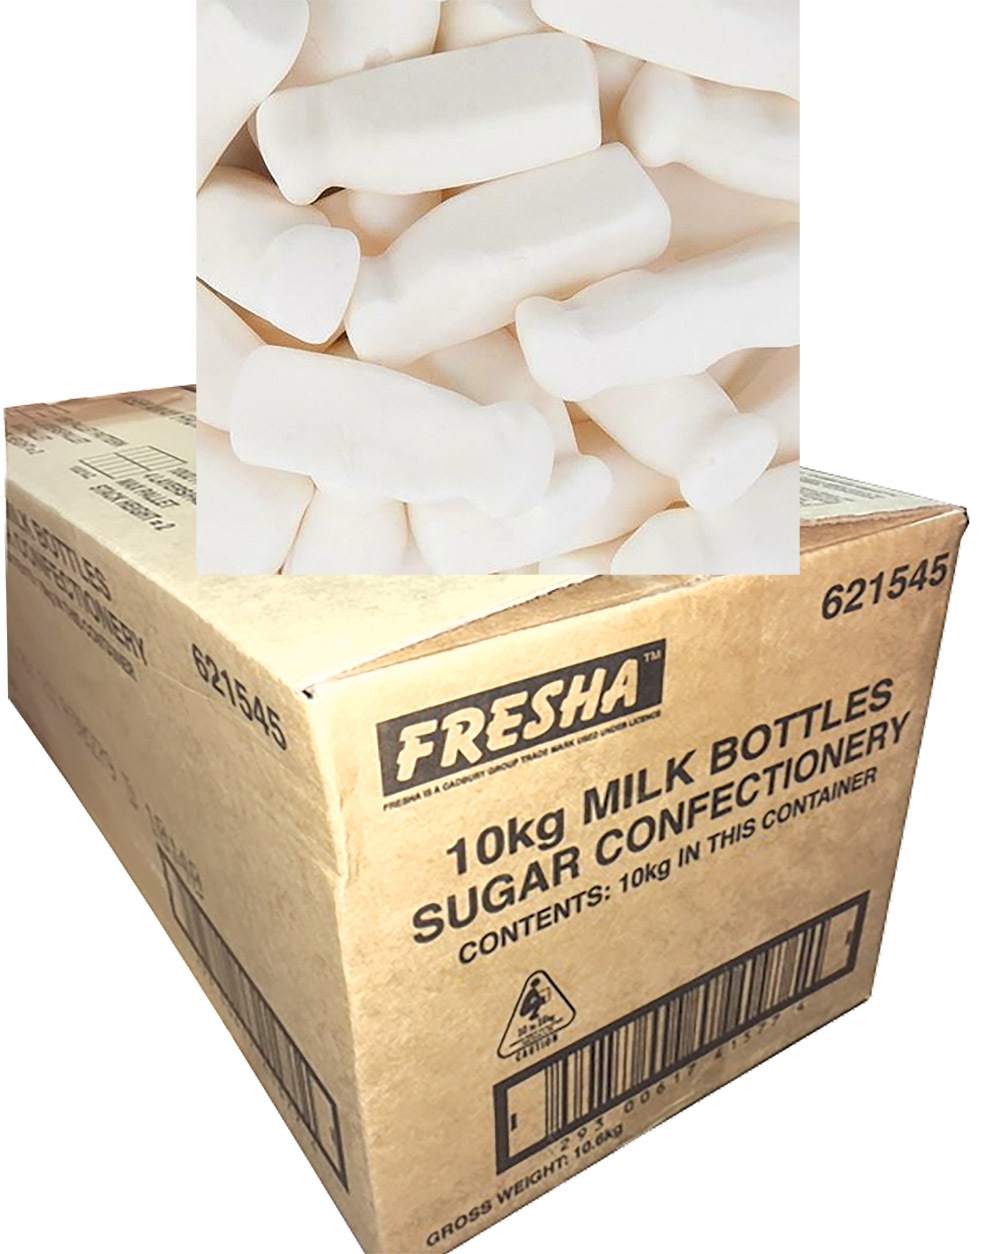 Milk Bottles 10kg Bulk carton lollies by Fresha